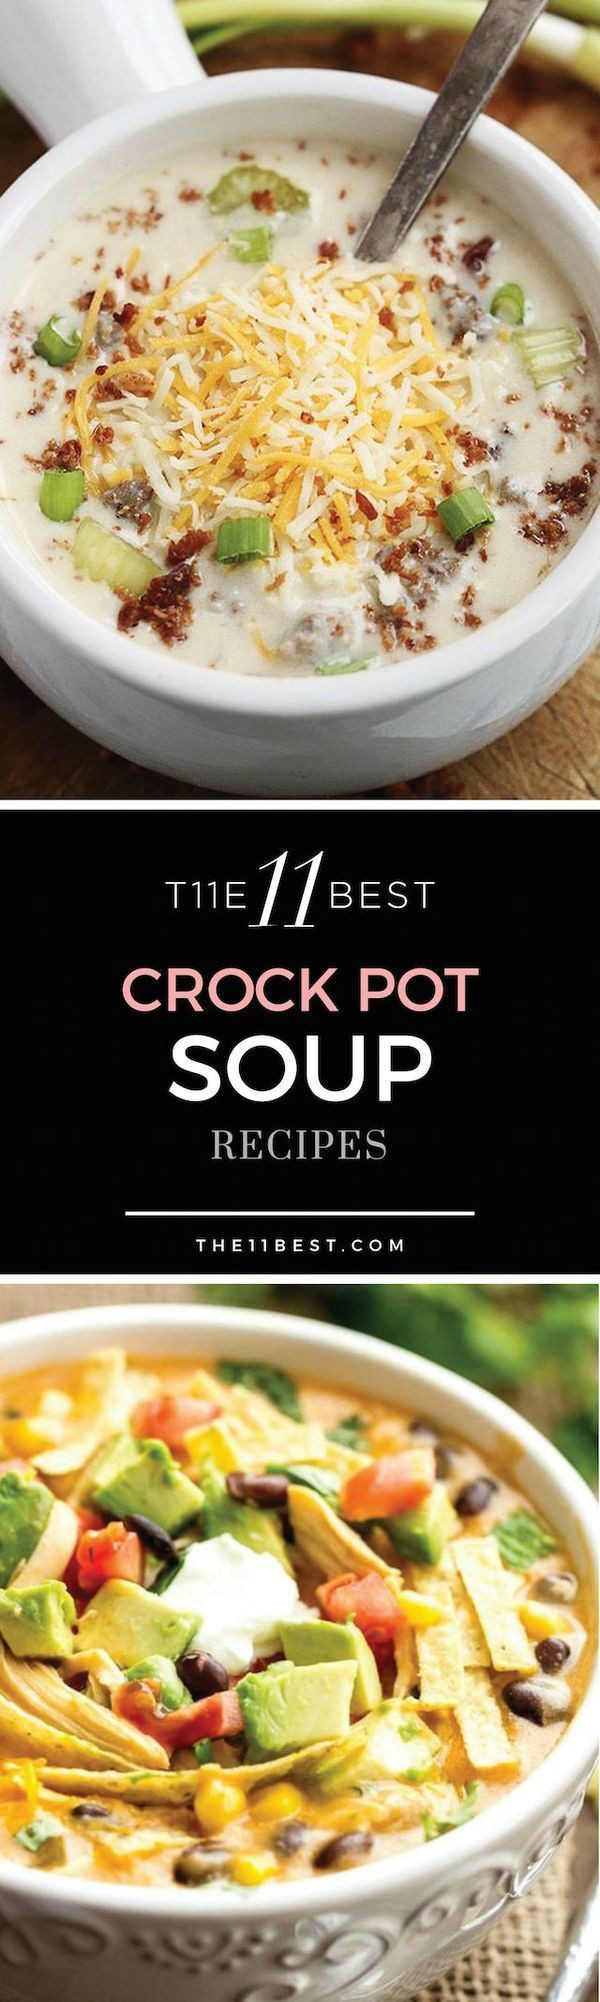 Crockpot Soups Healthy
 The 11 Best Crock Pot Soup Recipes